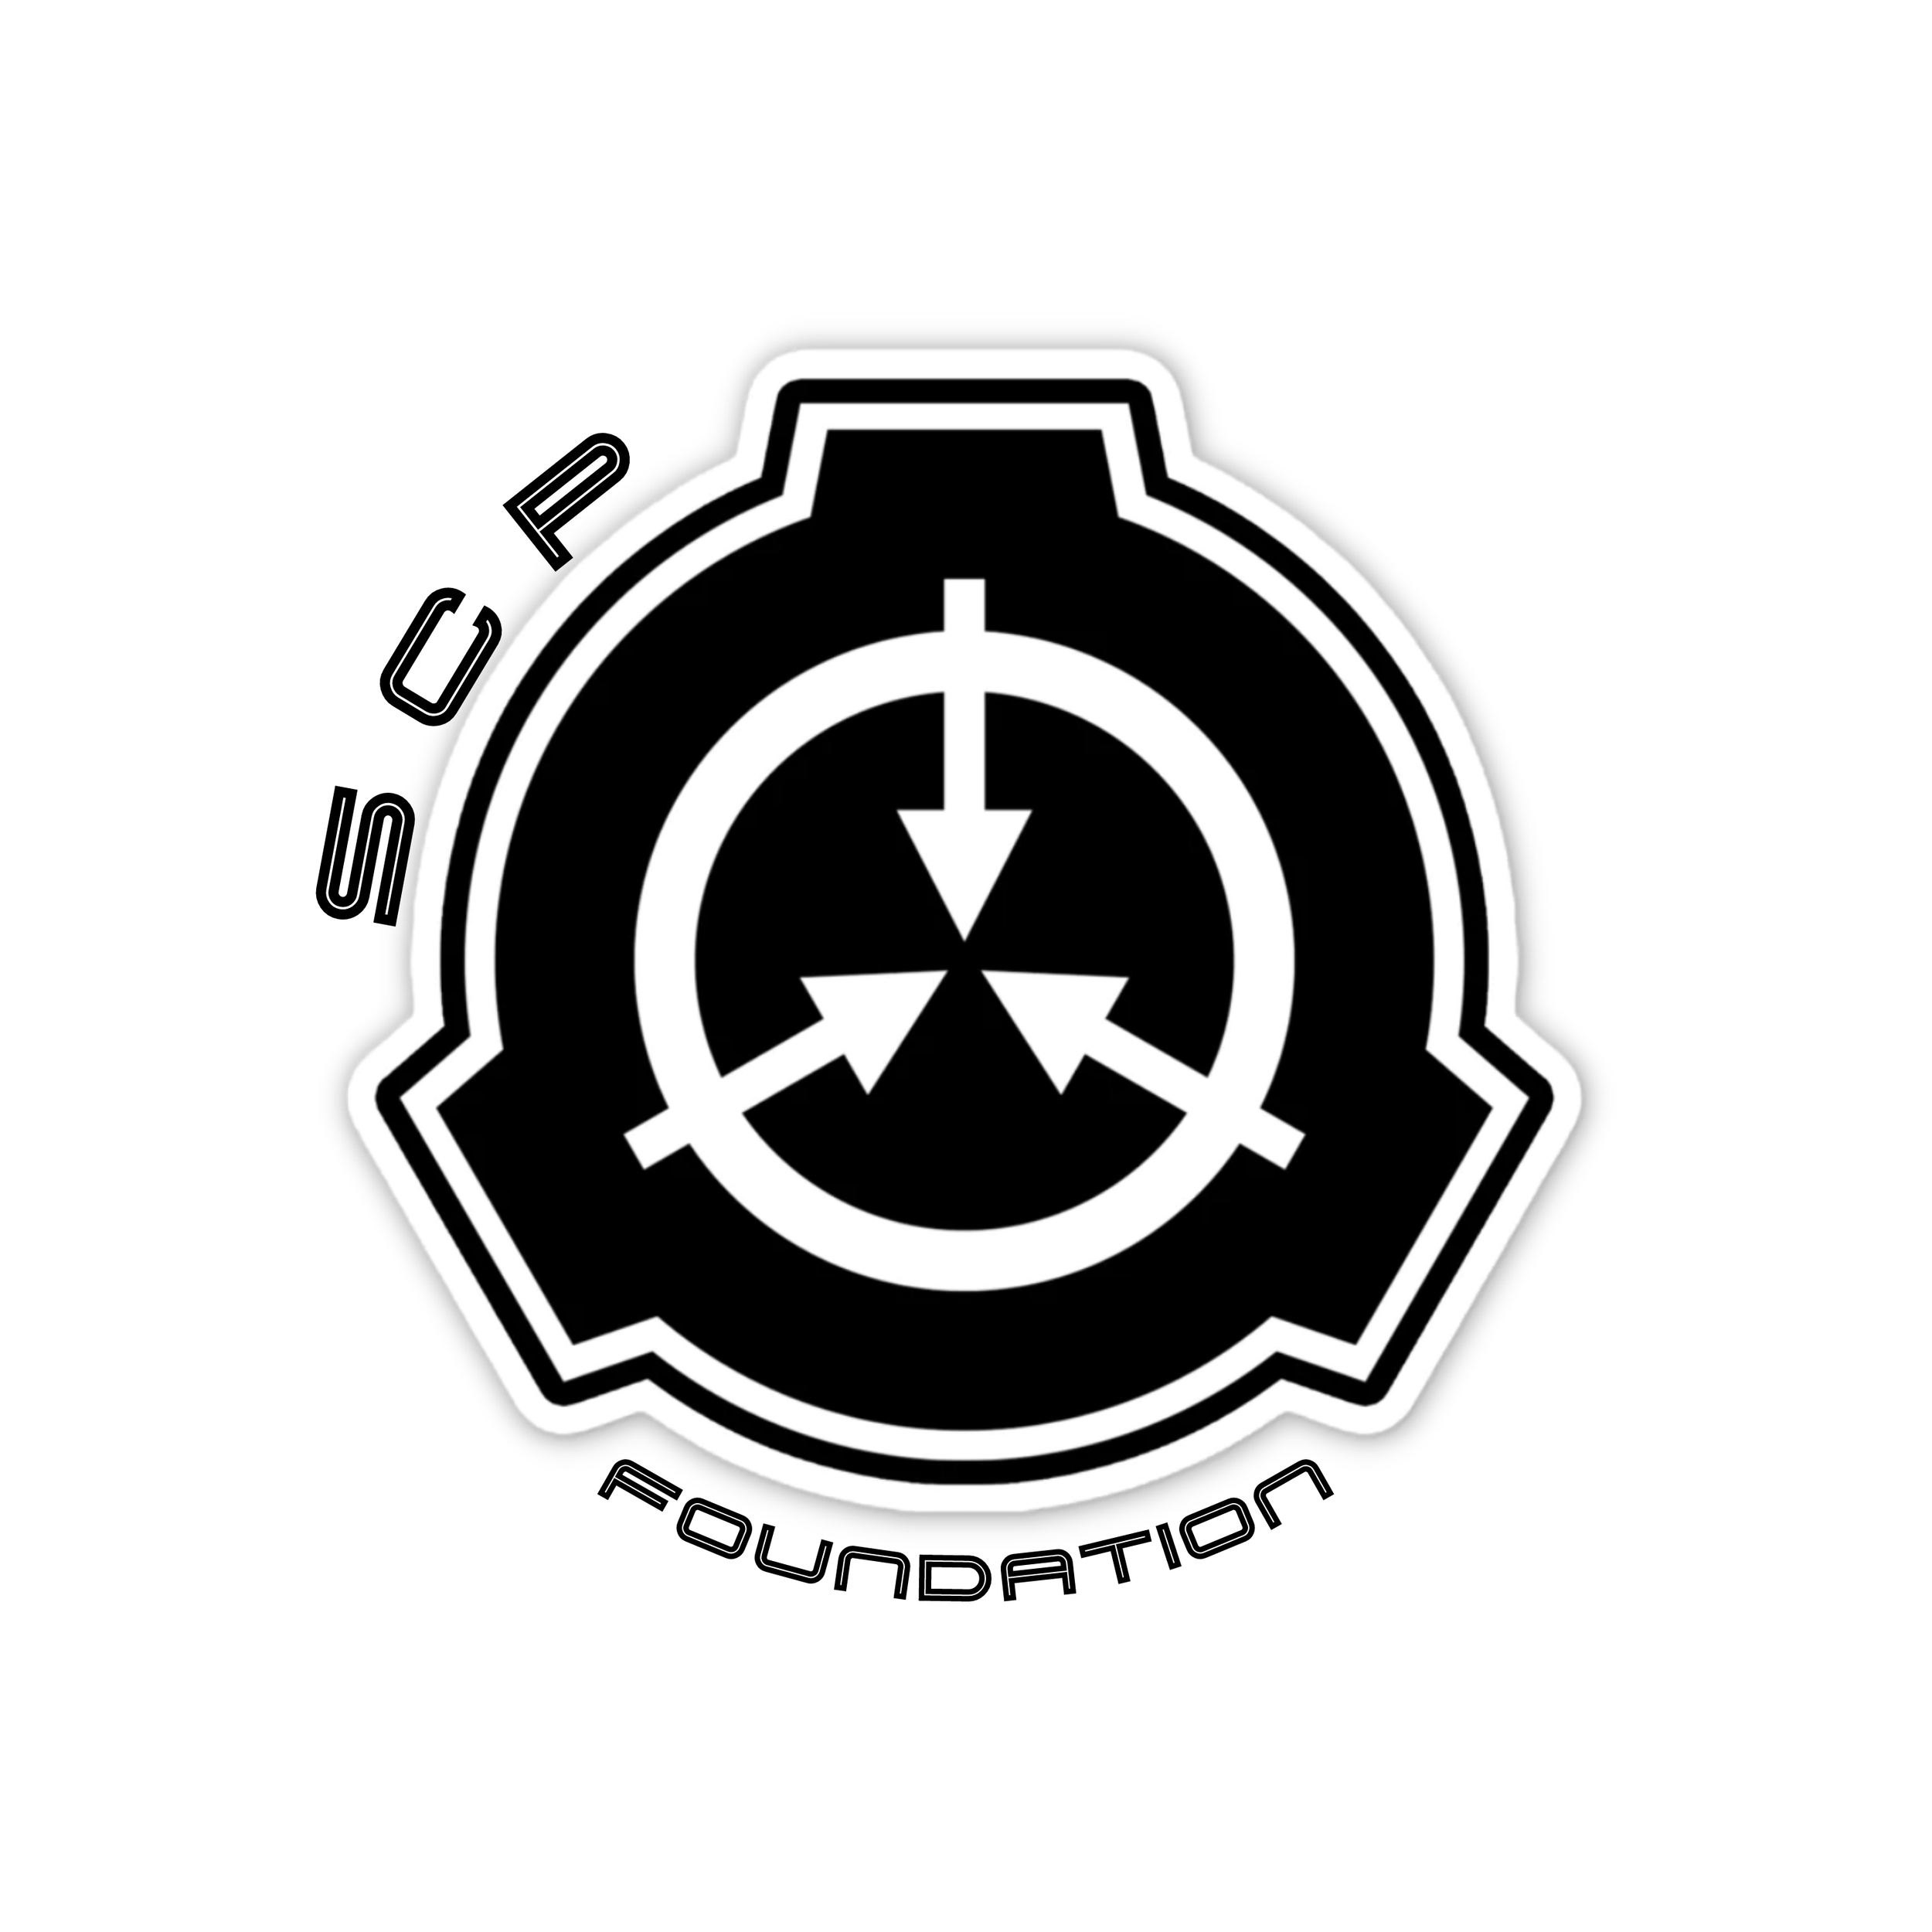 Scp foundation logo